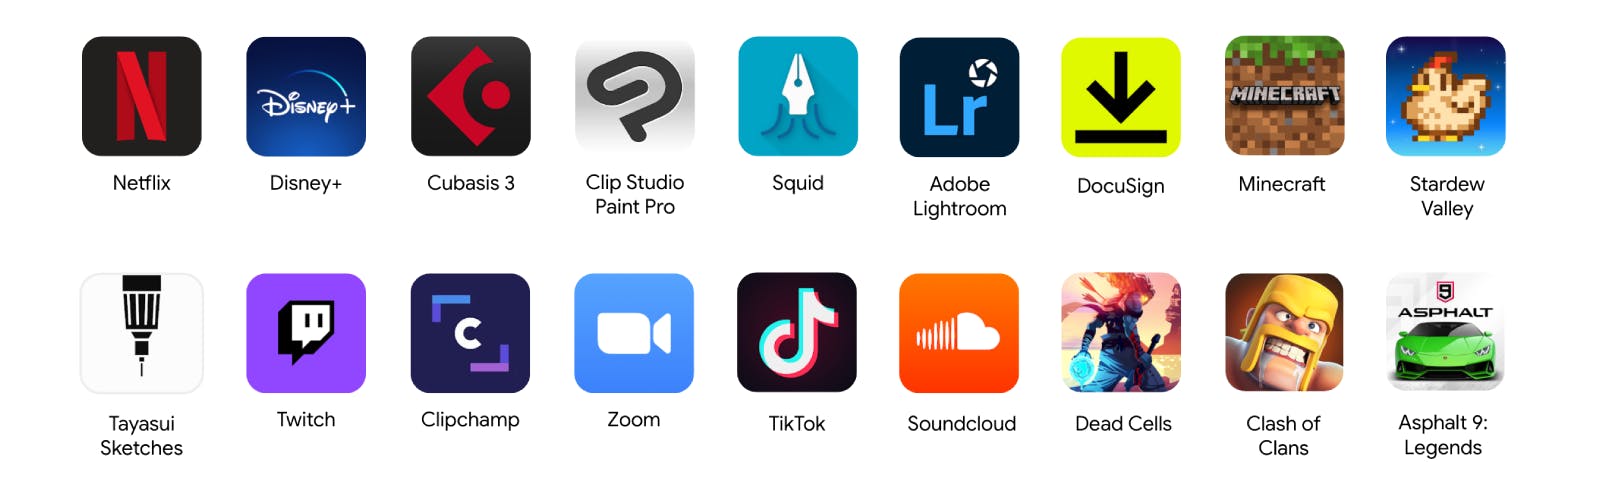 Logos of apps that adapted for Chrome OS: Netflix, Disney+, Cubasis 3, Clip Studio Paint Pro, Squid, Adobe Lightroom, DocuSign, Minecraft, Stardew Valley, Tayasui Sketches, Twitch, Clipchamp, Zoom, TikTok, Soundcloud, Dead Cells, Clash of Clans, Asphalt 9: Legends